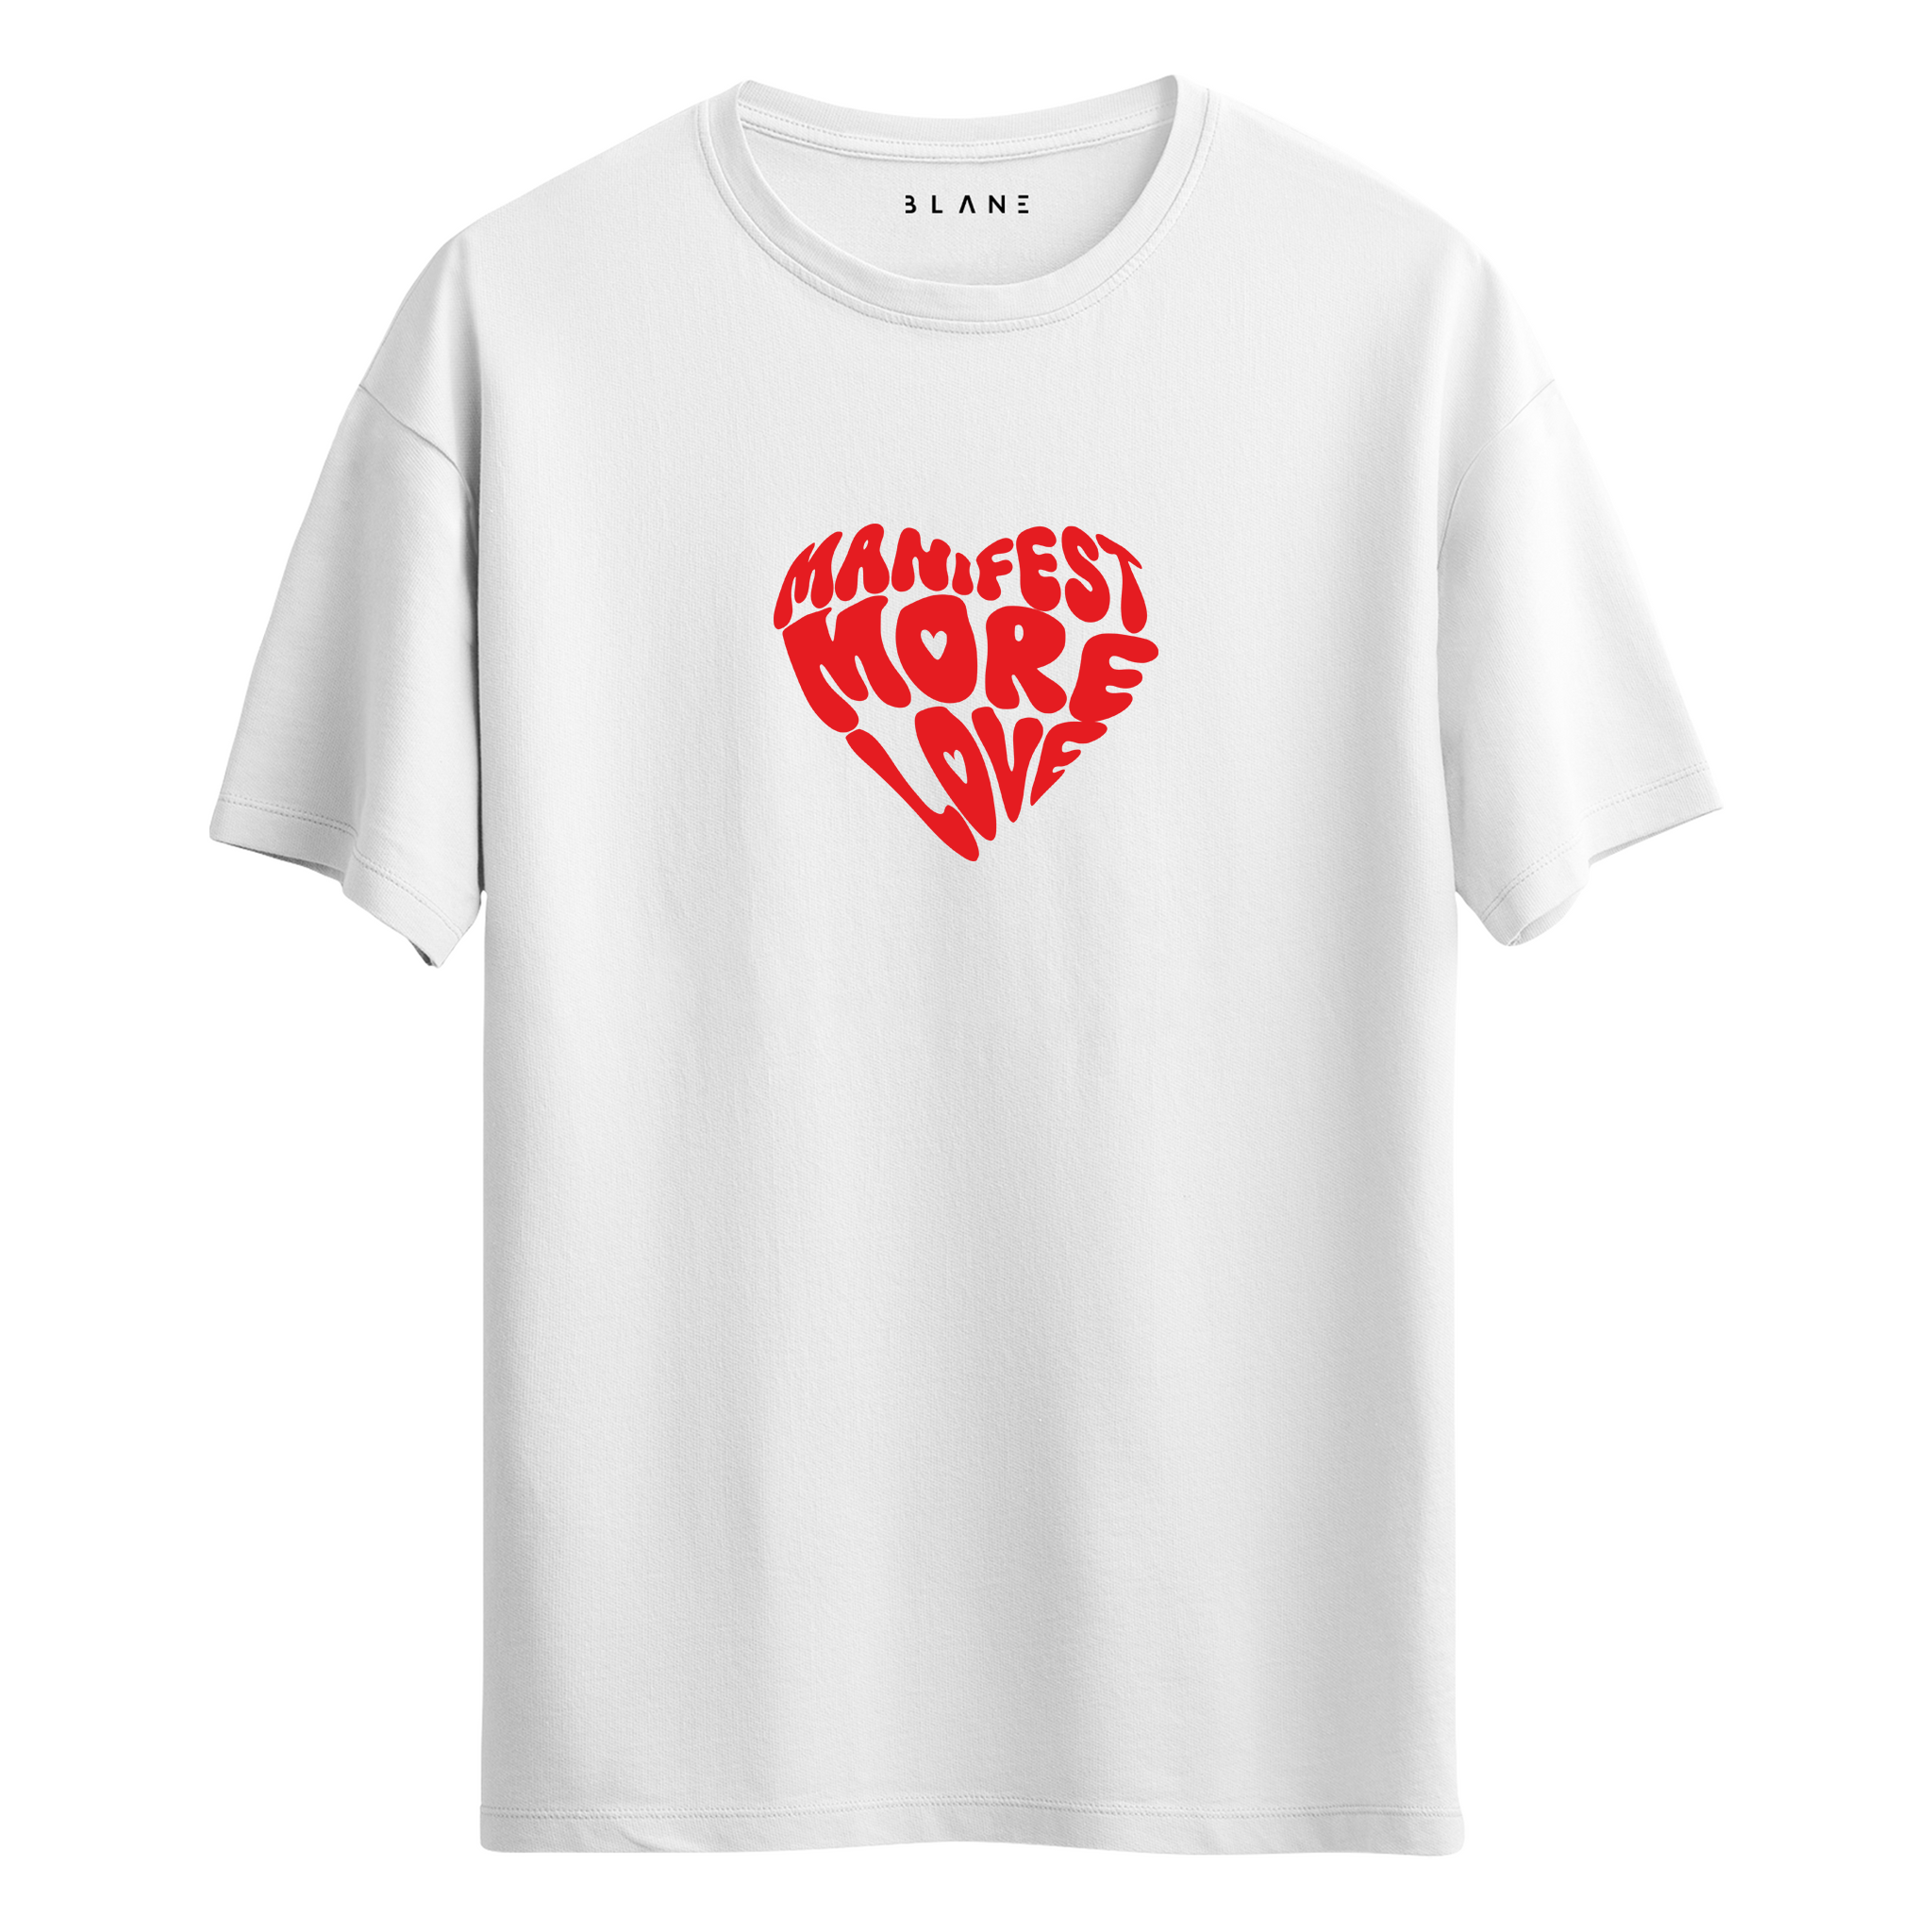 Manifest More Love - T-Shirt